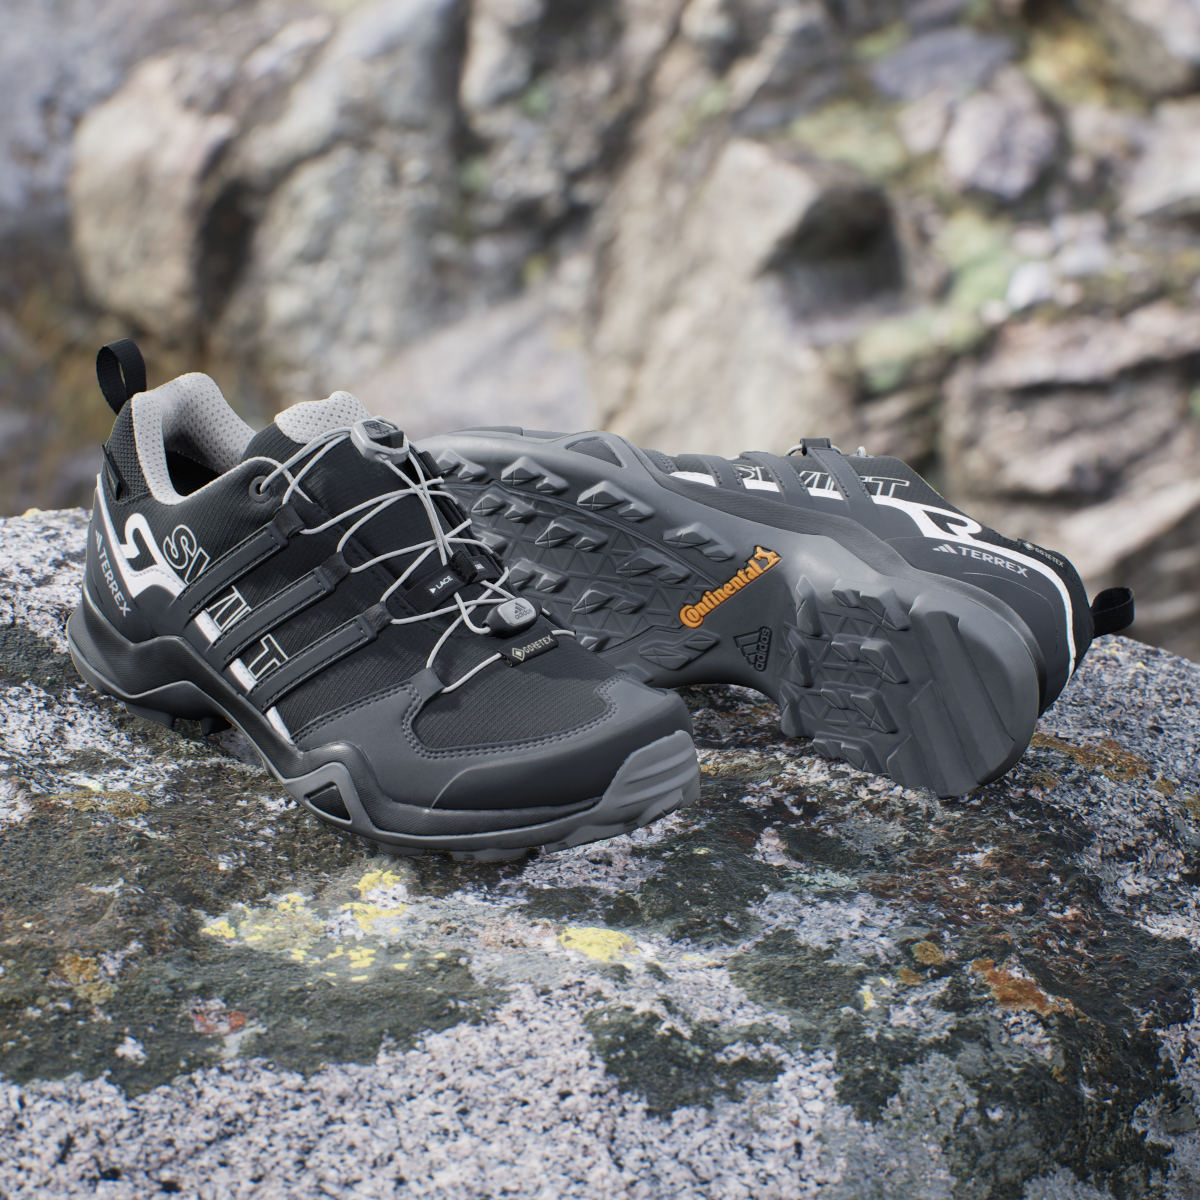 Adidas Terrex Swift R2 GORE-TEX Hiking Shoes. 8